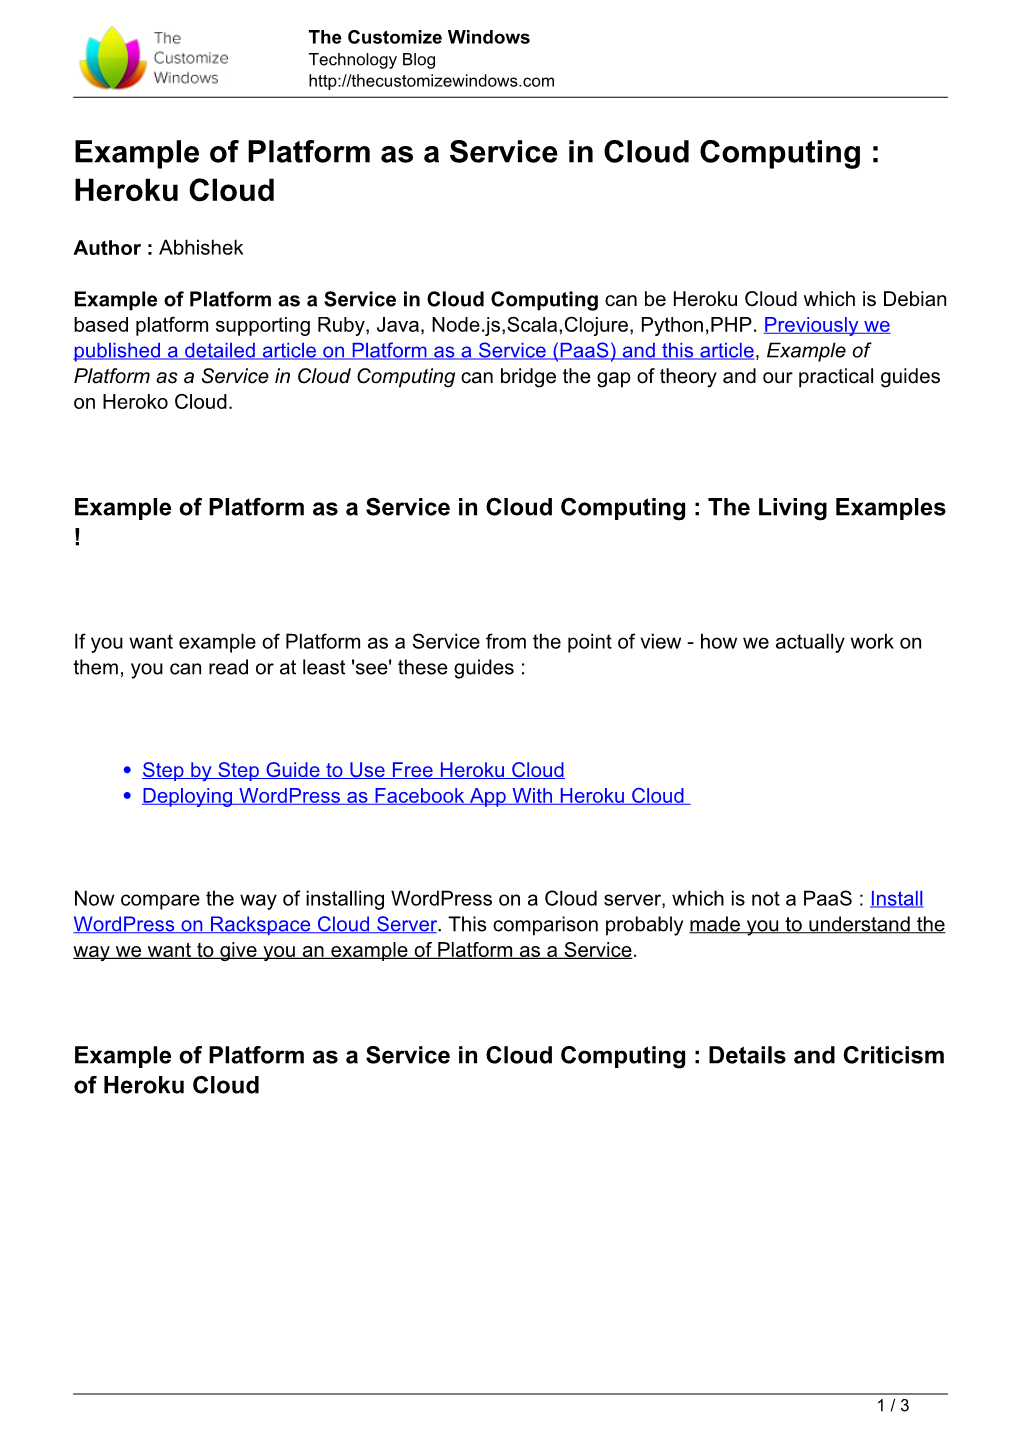 Example of Platform As a Service in Cloud Computing : Heroku Cloud